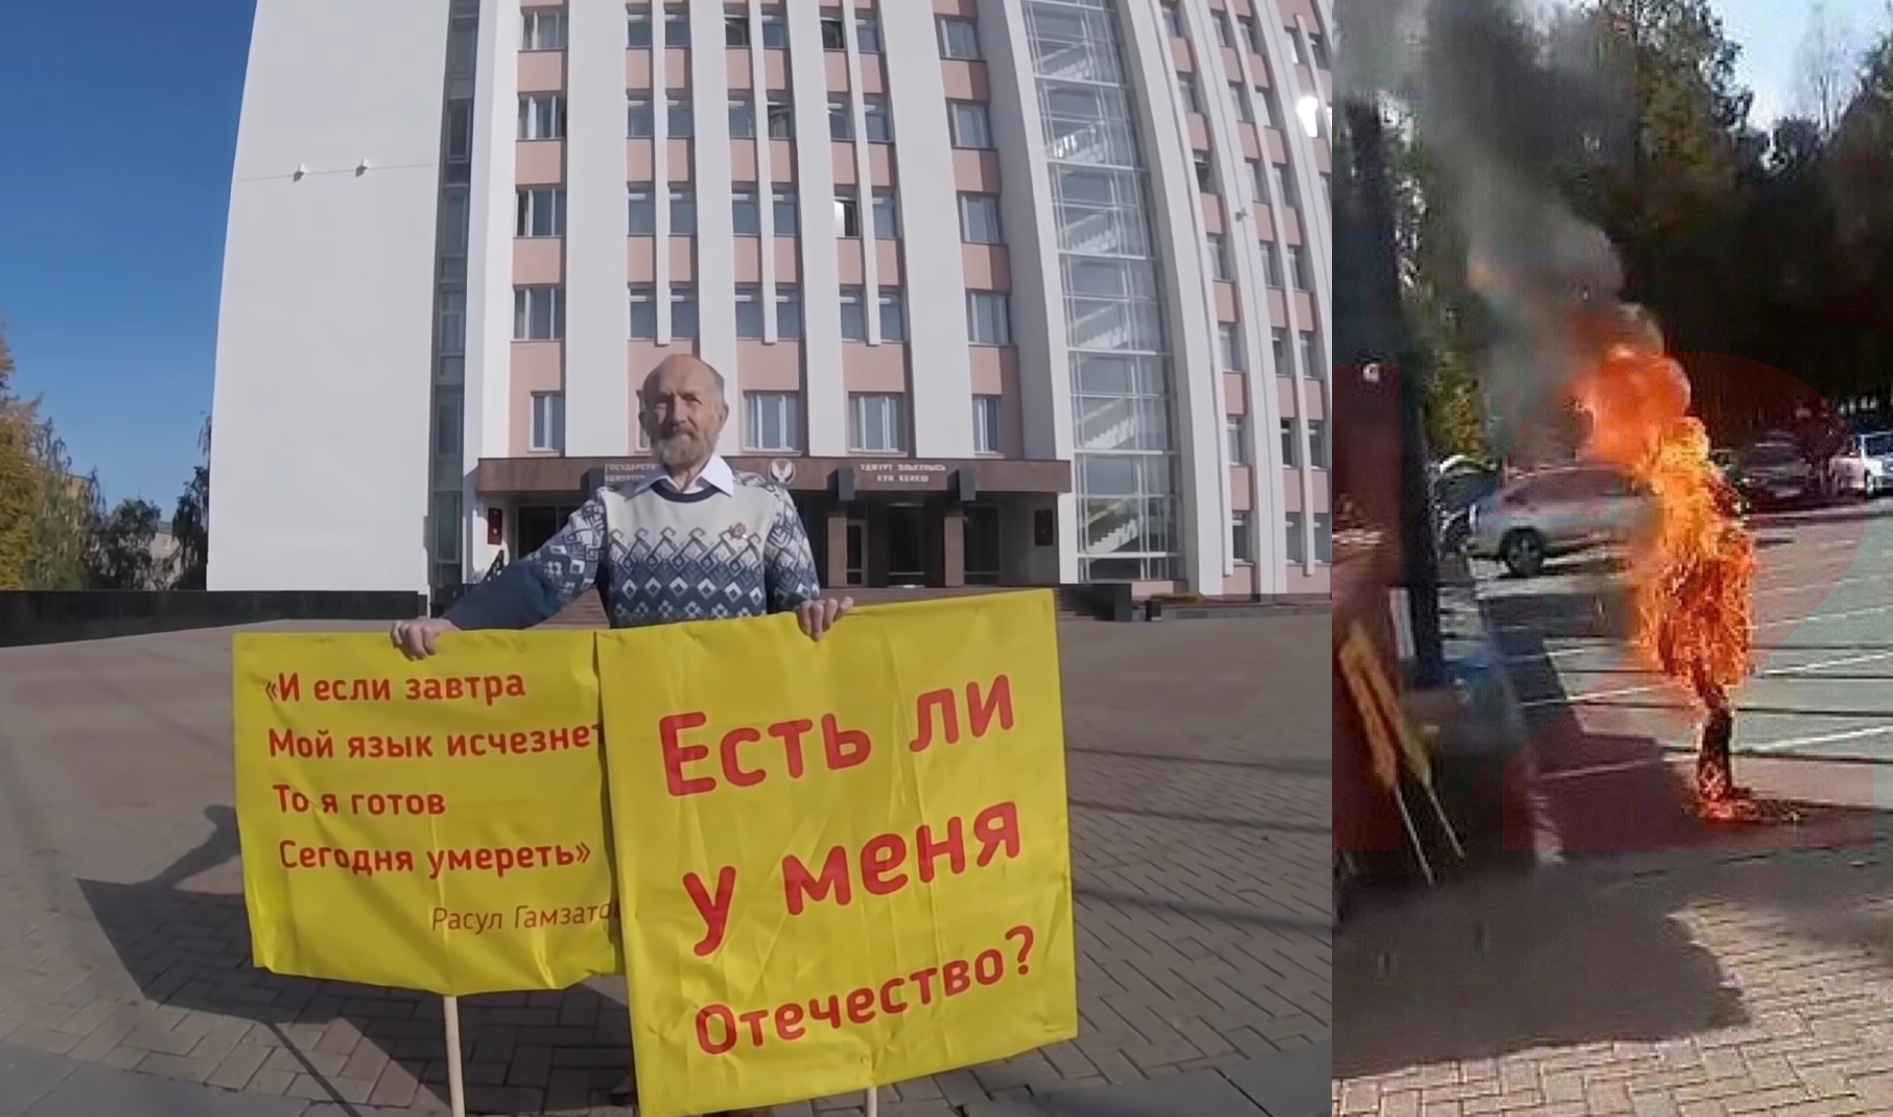 Udmurt Albert Razin on 10 Sept 2019 on his single person protest against suppression of Udmurt language